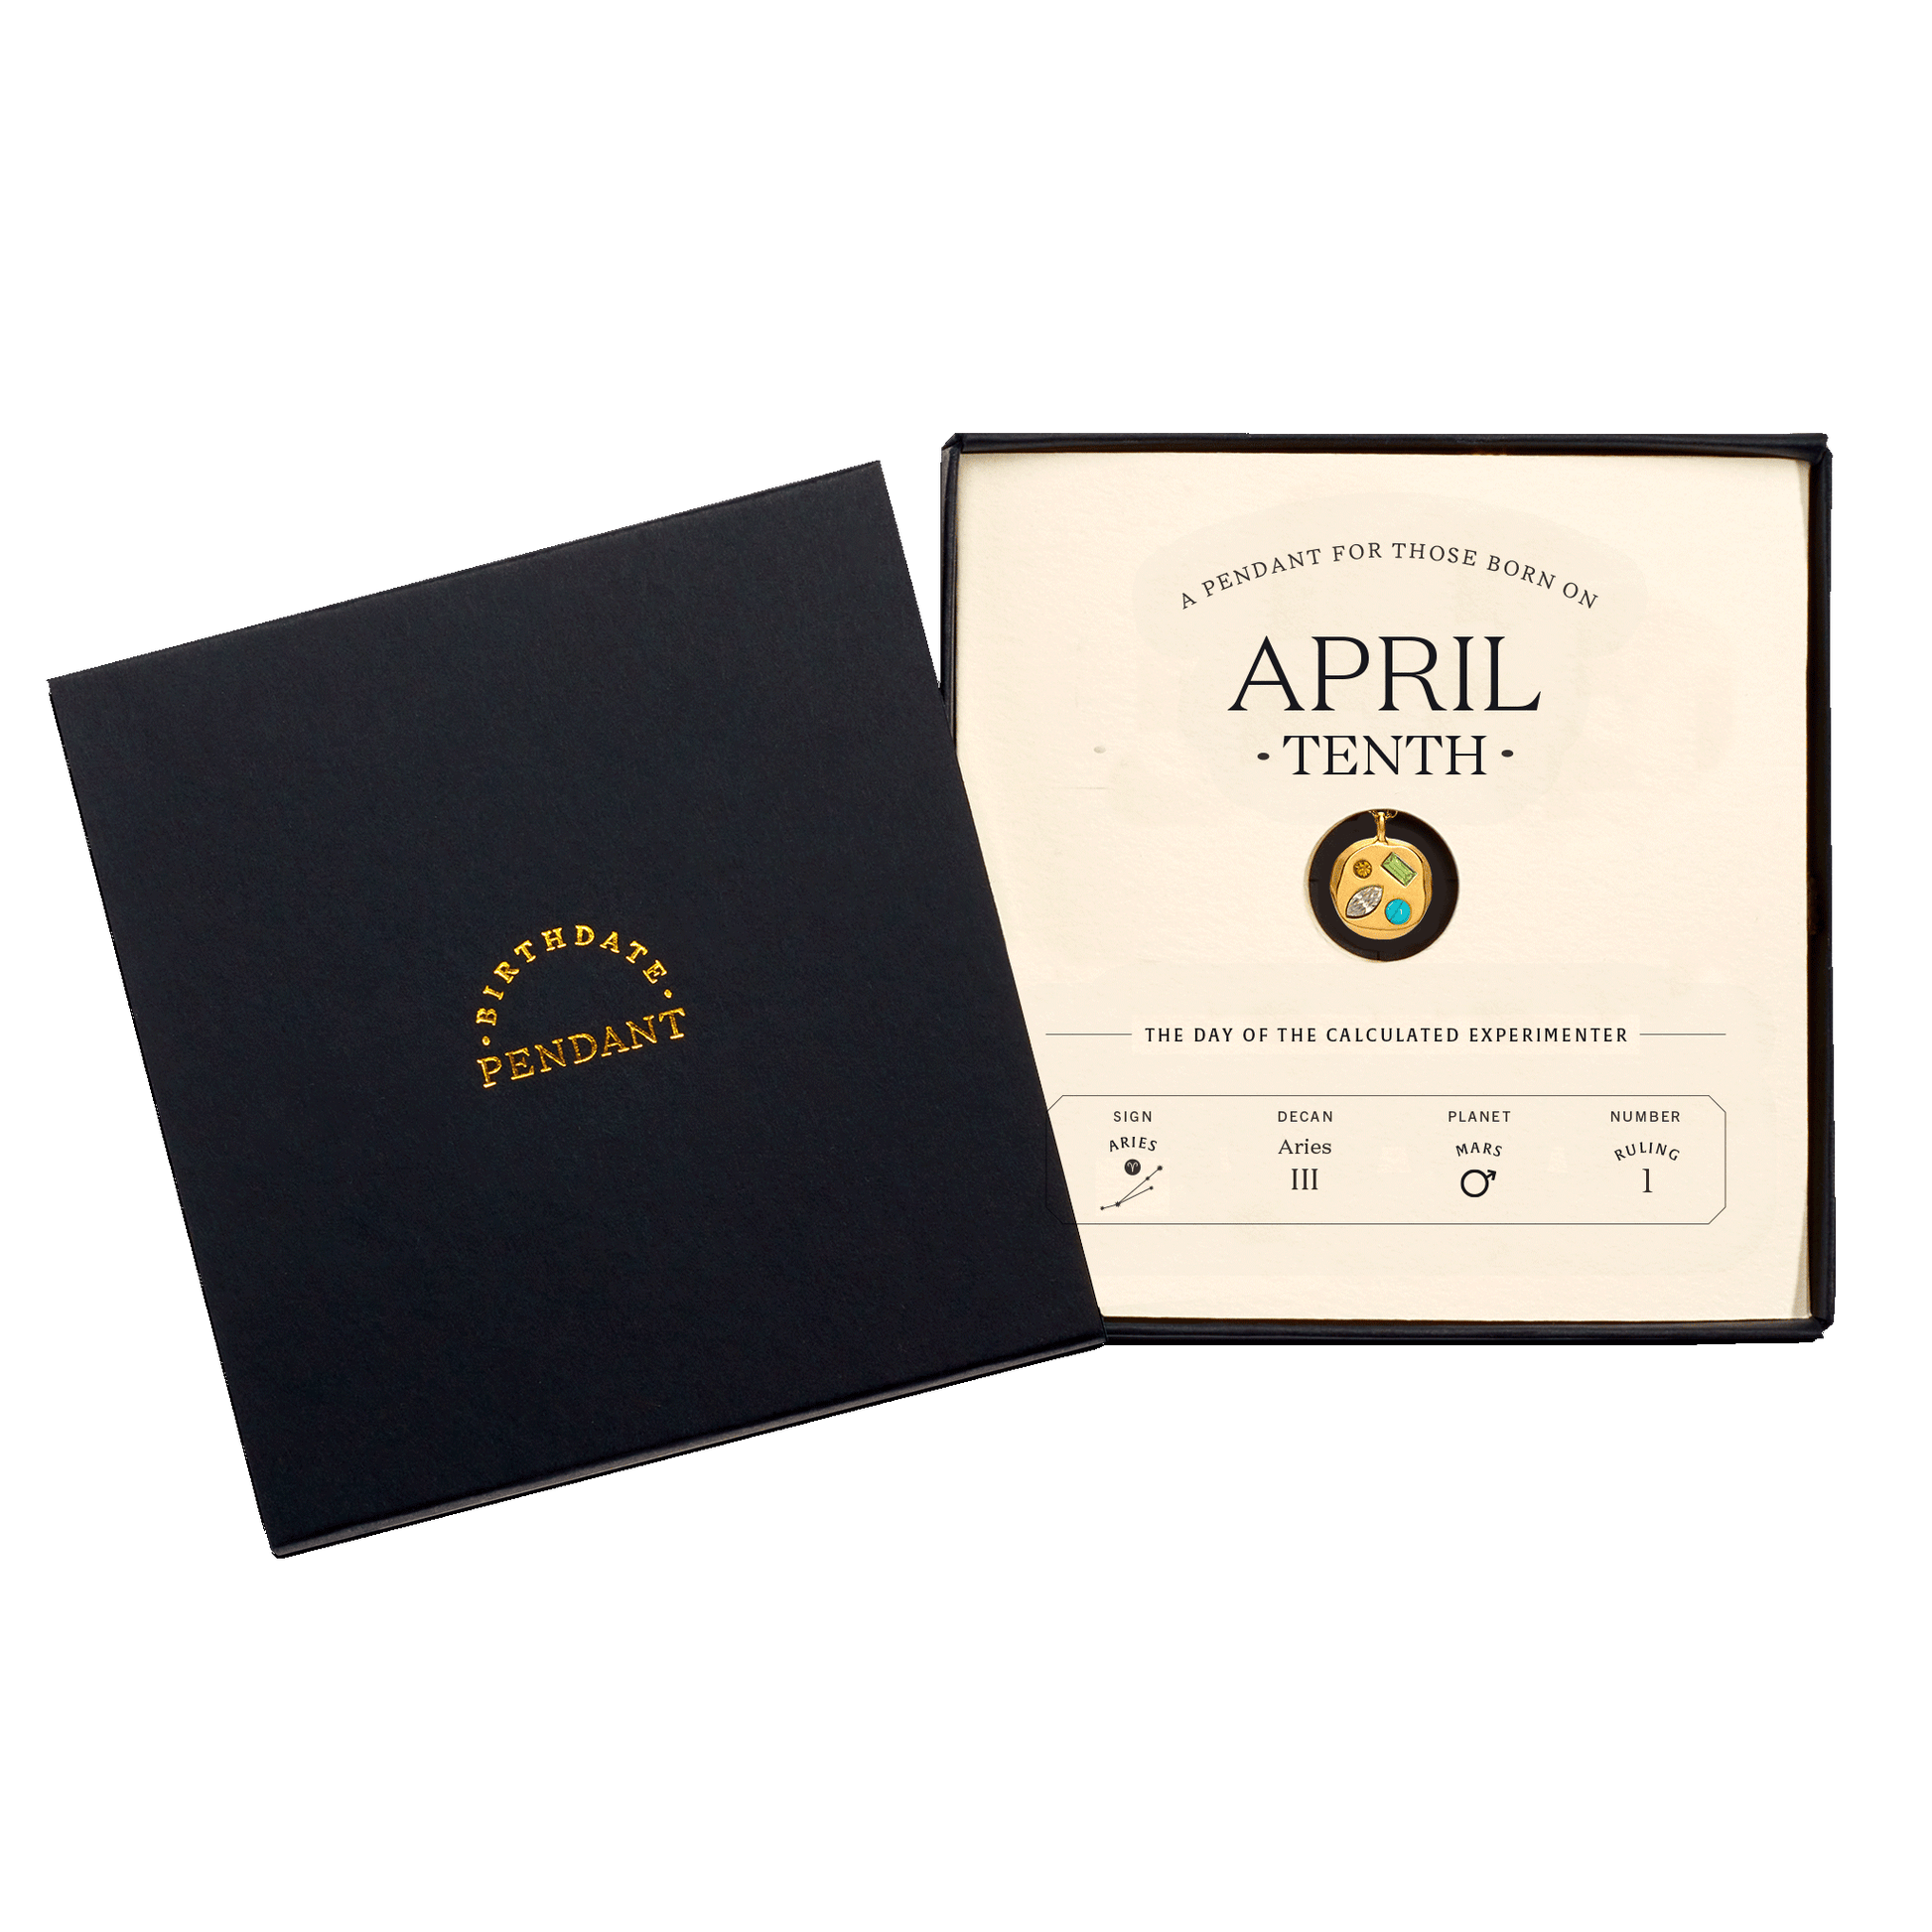 The April Tenth Pendant inside its box